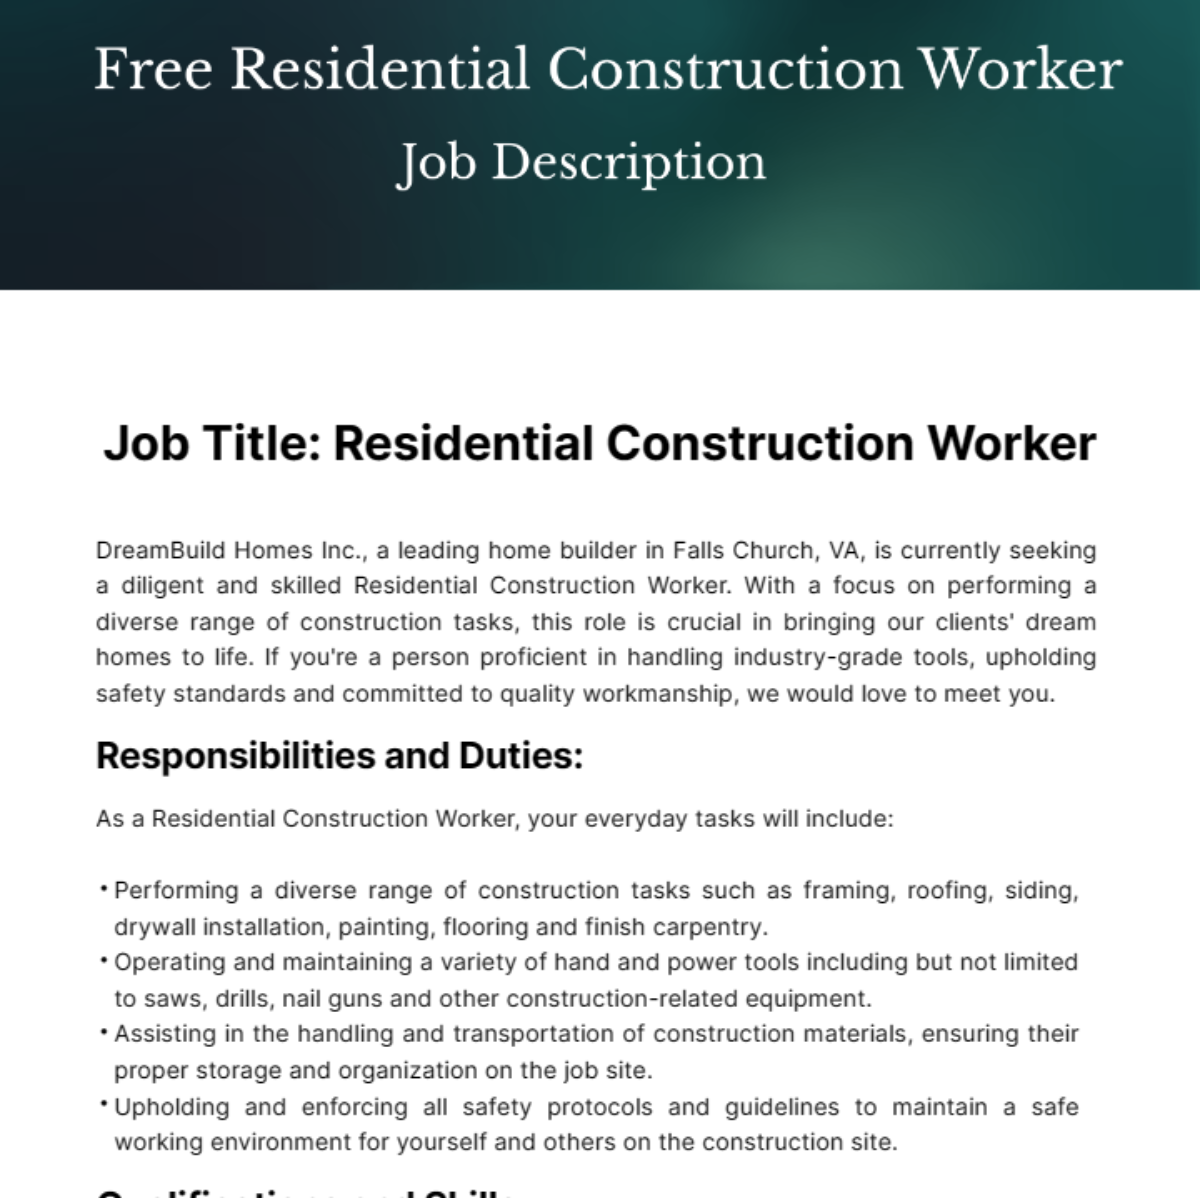 Free Residential Construction Worker Job Description Template